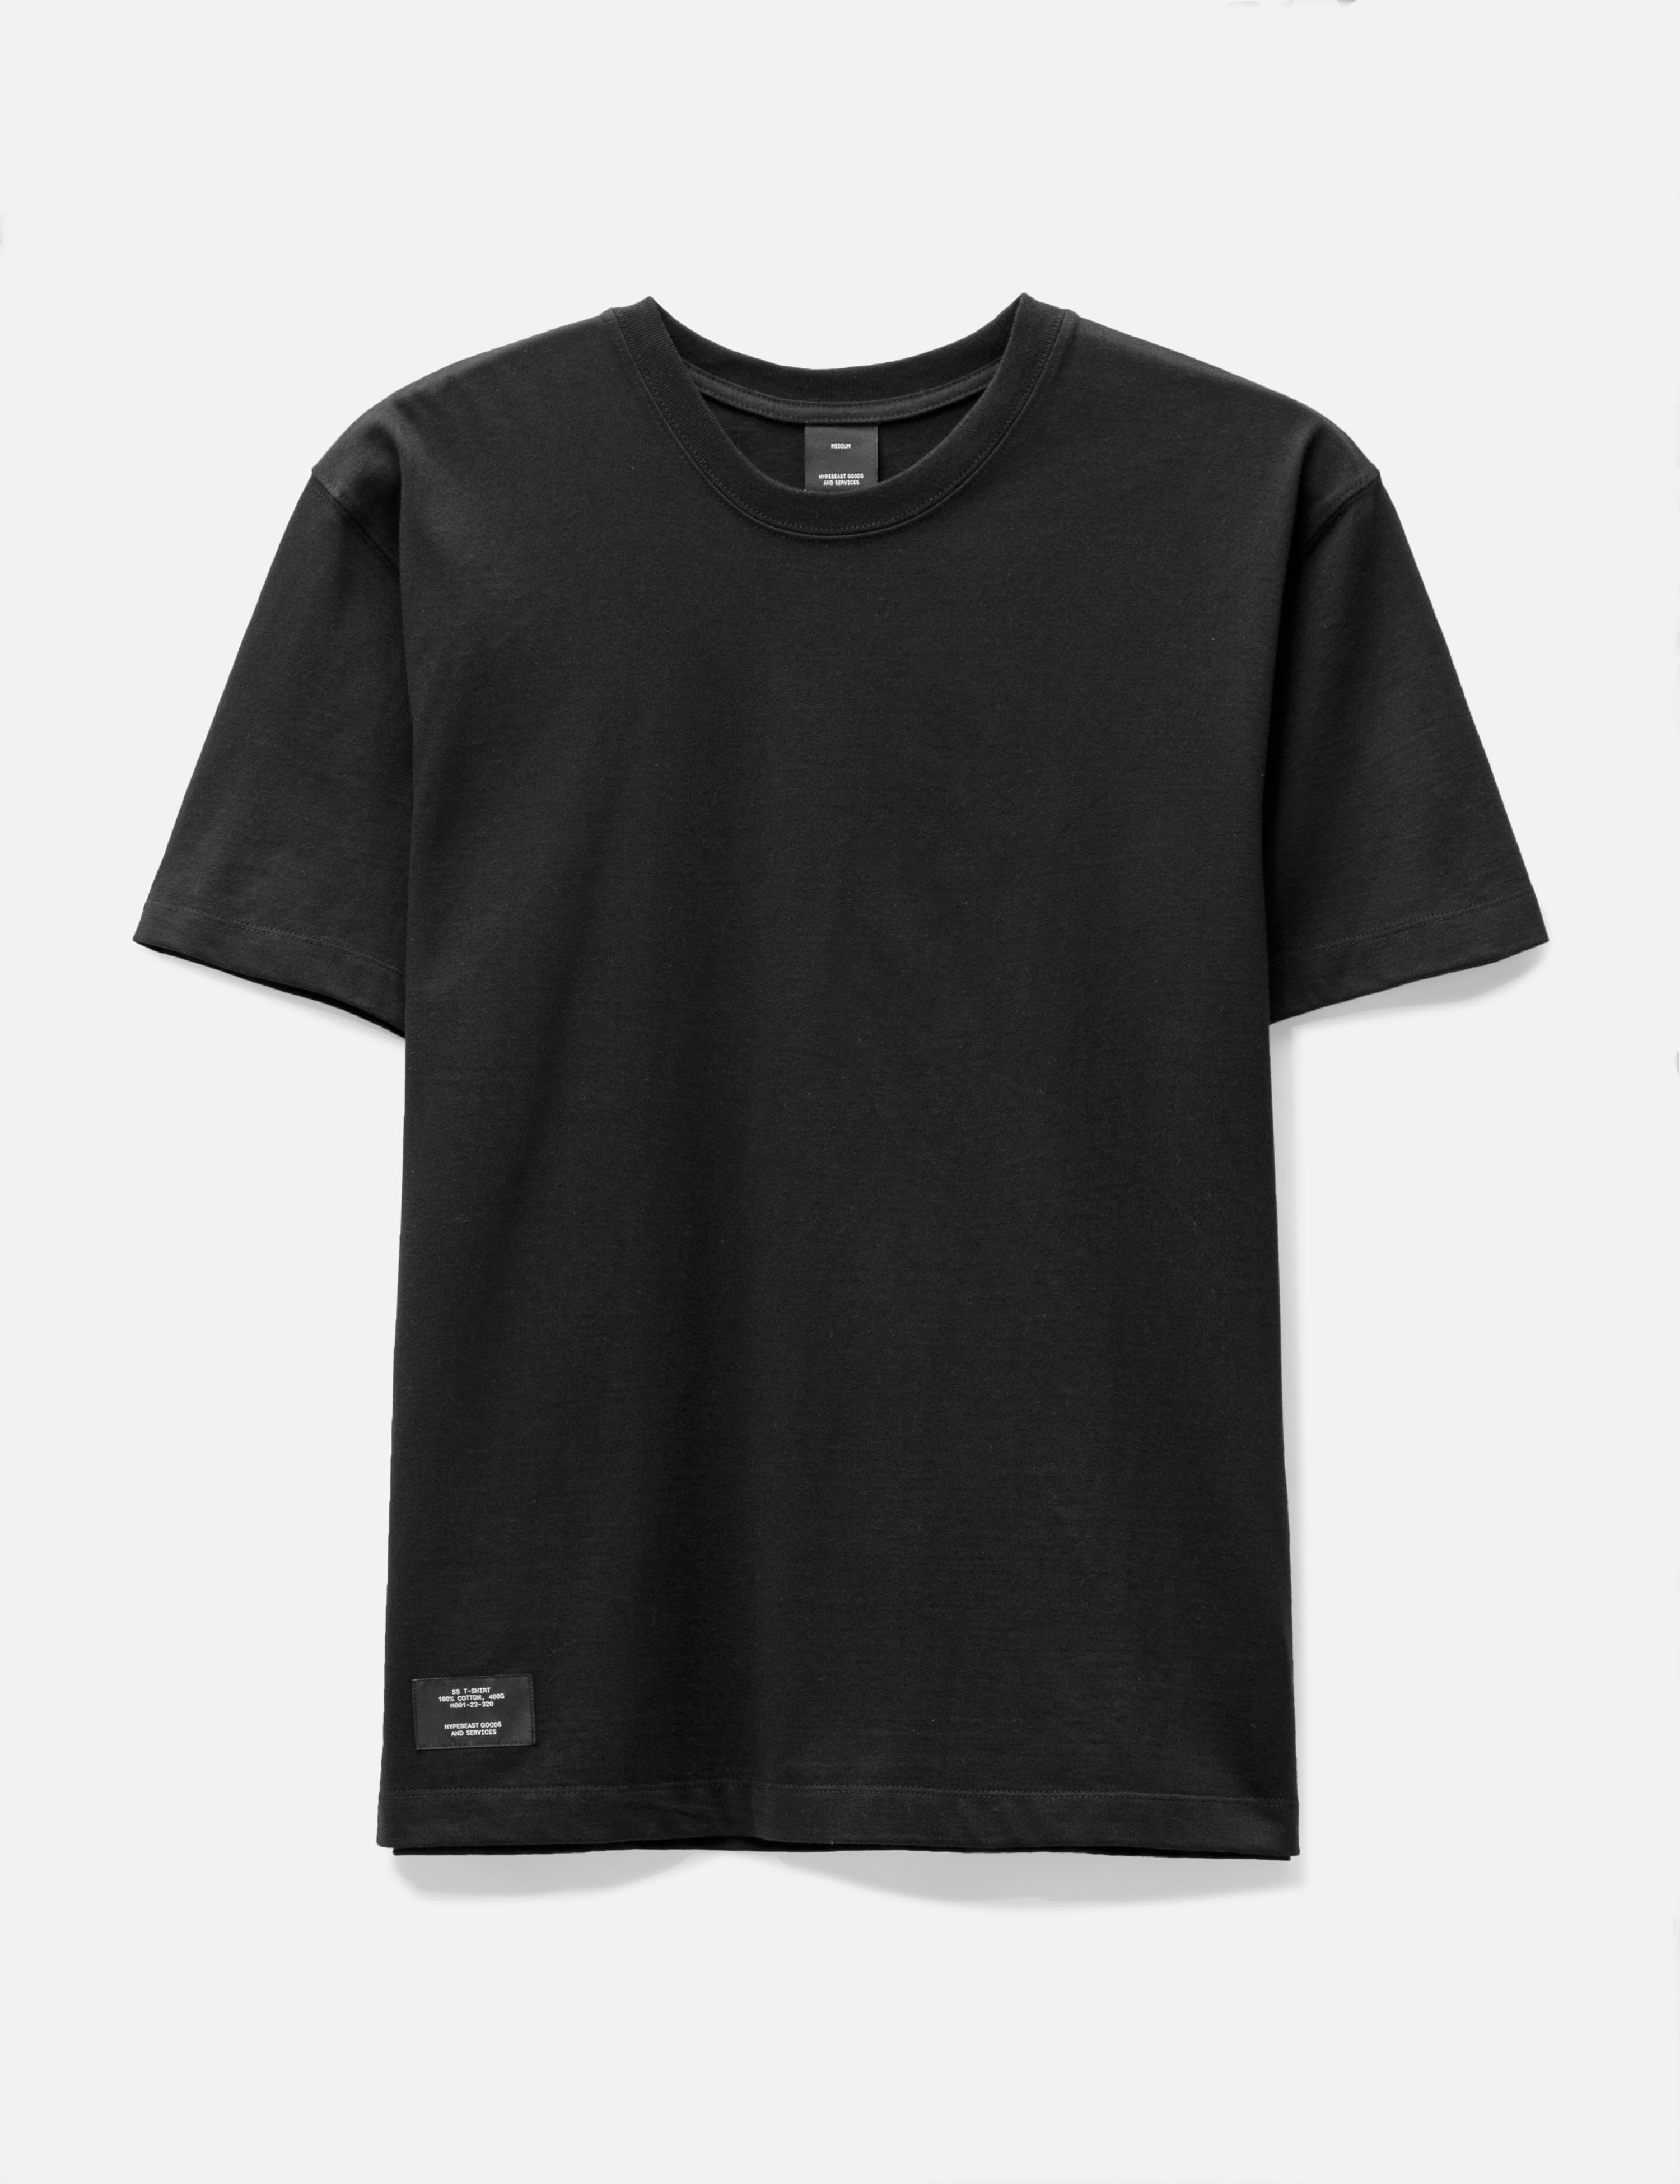 Thom/krom - Double Layer T -Shirt | HBX - ハイプビースト(Hypebeast